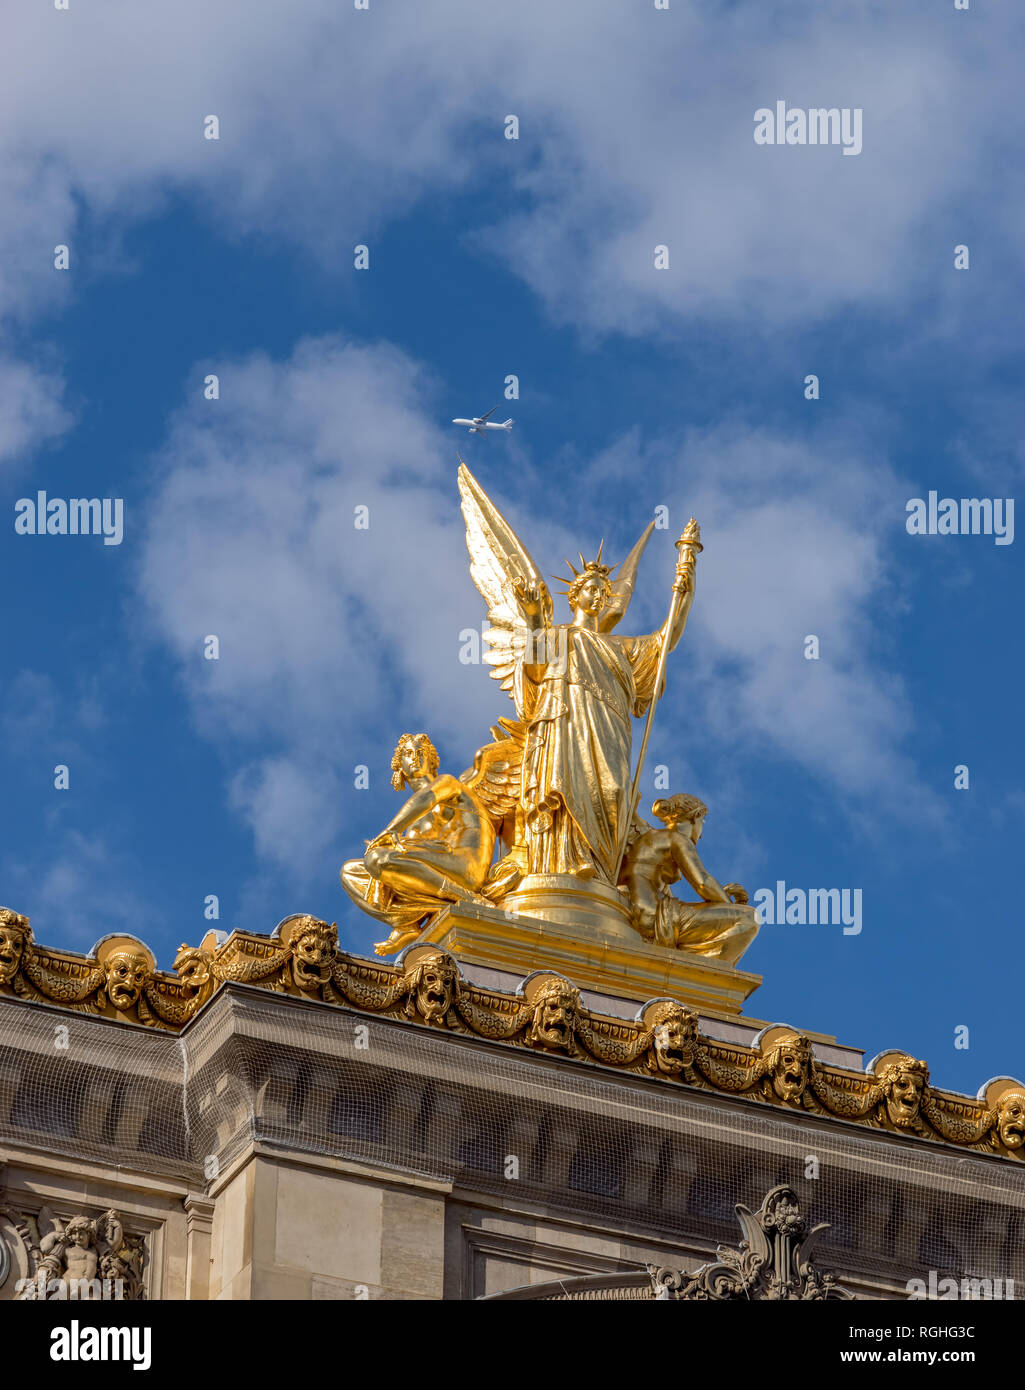 Airplane and Statue of Opera Garnier in Paris Stock Photo